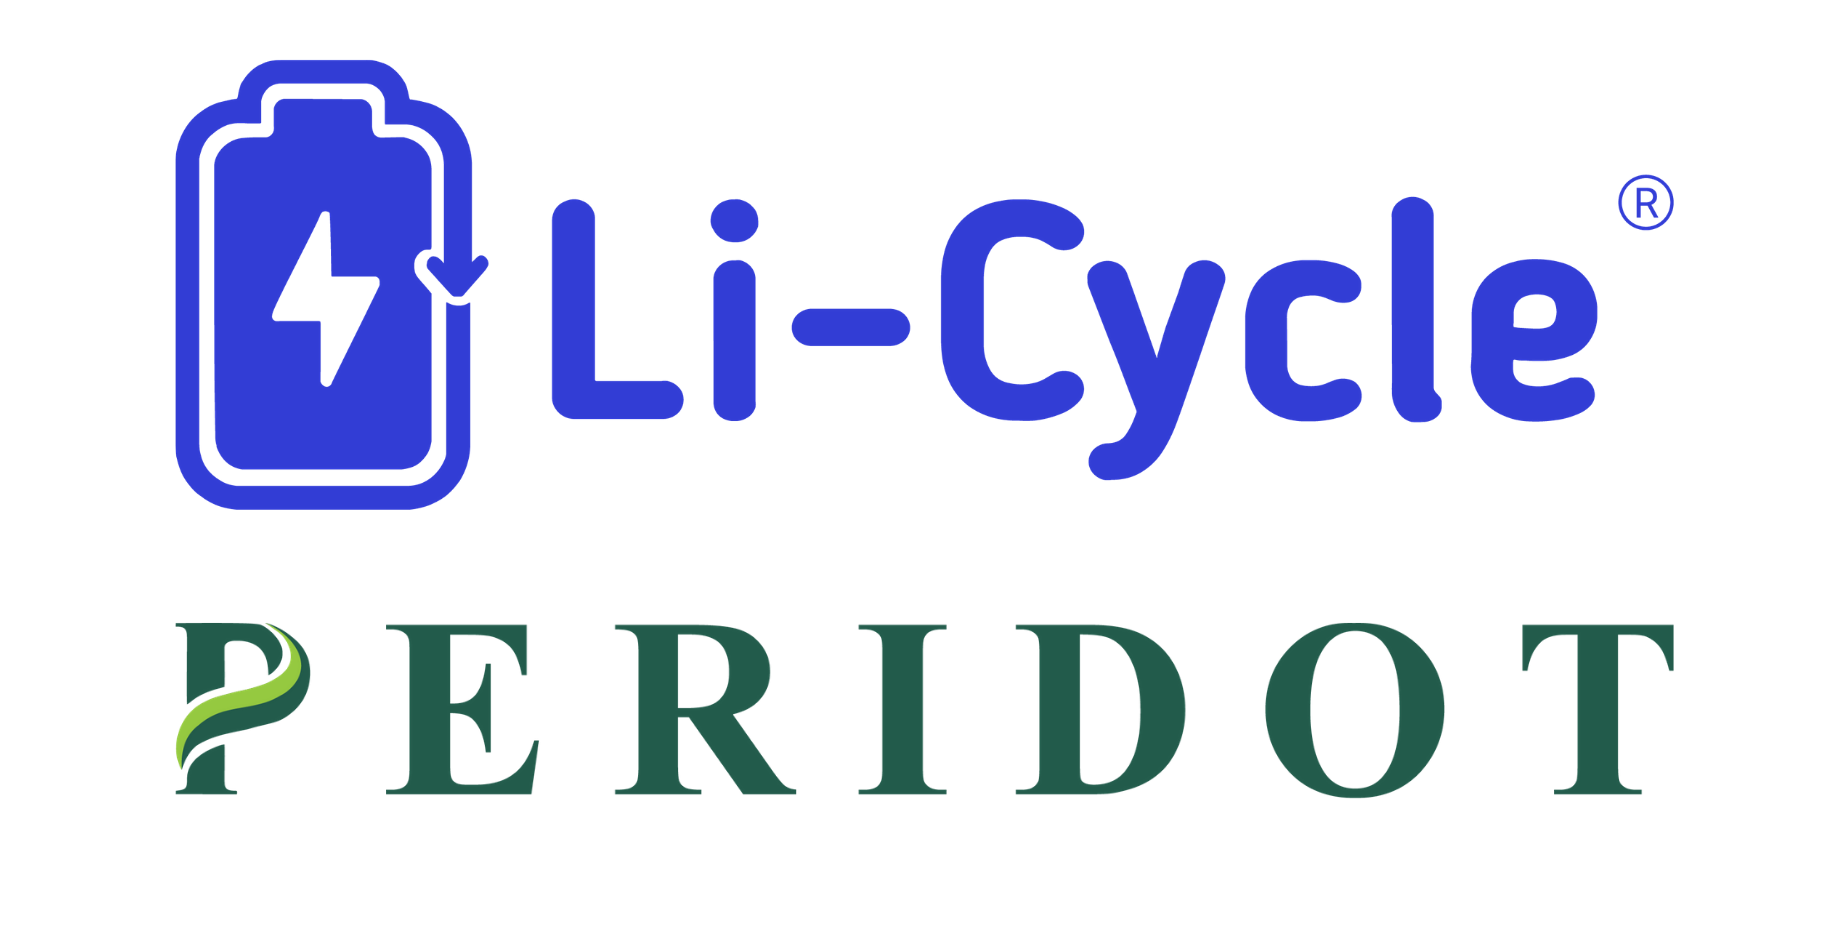 Li-Cycle & Peridot logo